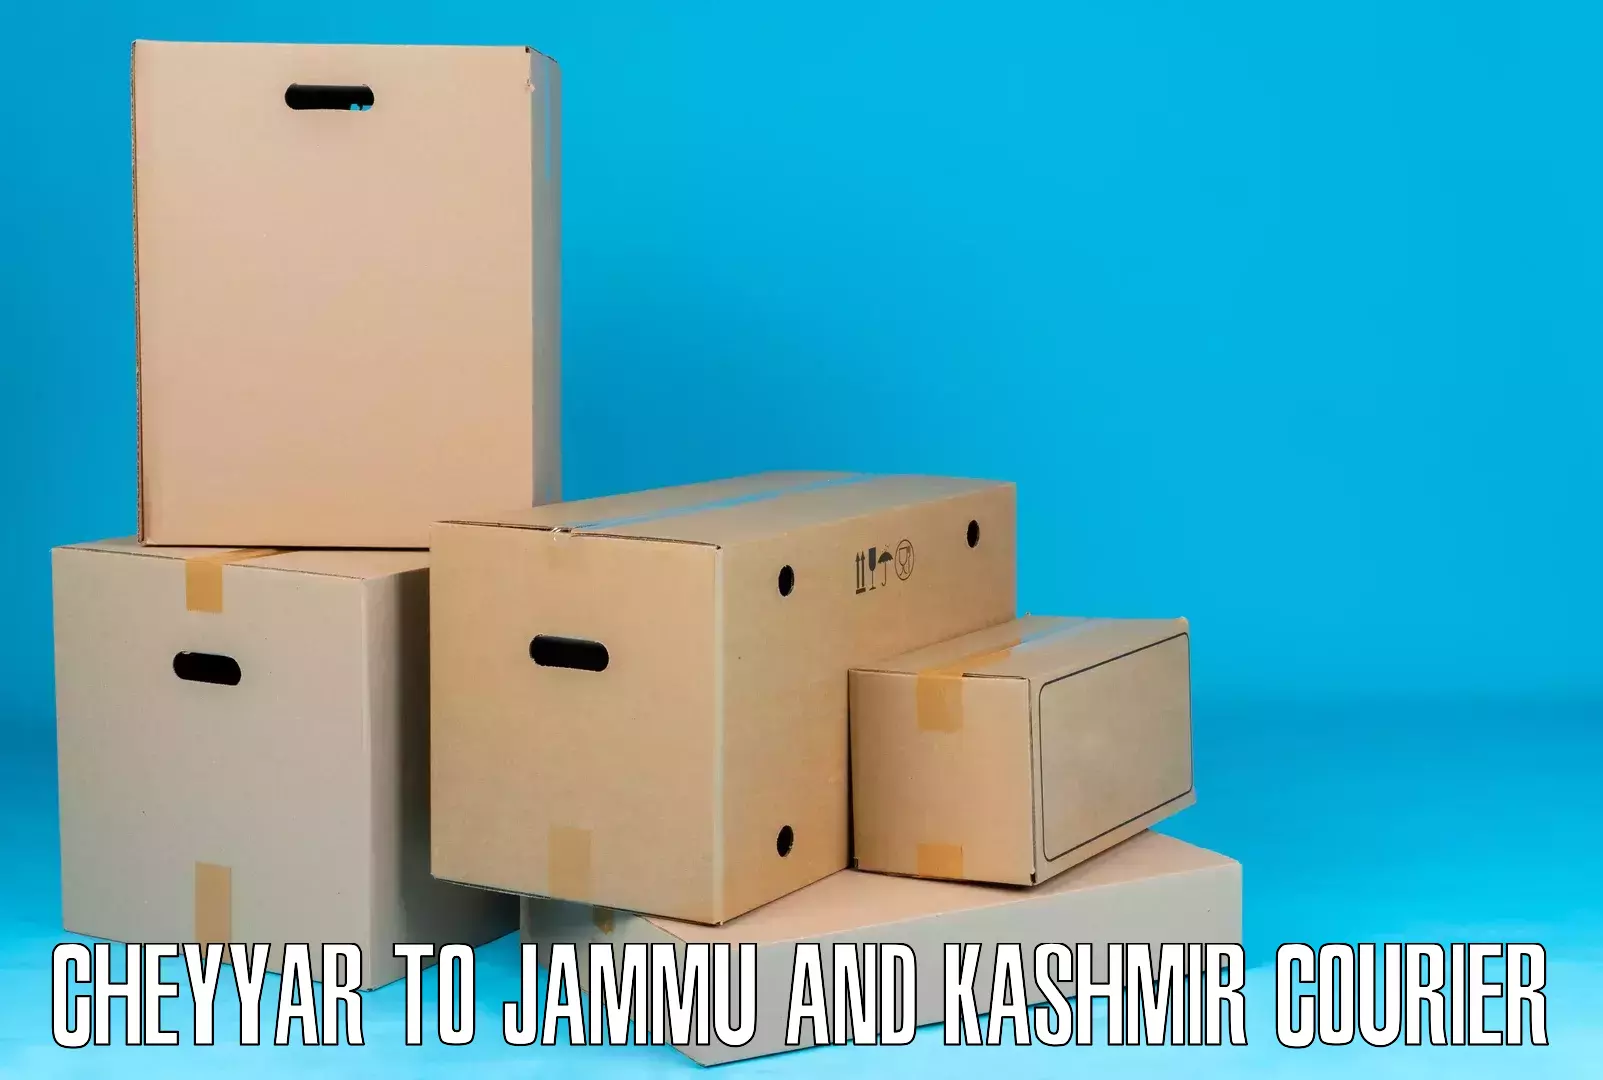 Courier service partnerships Cheyyar to Jammu and Kashmir